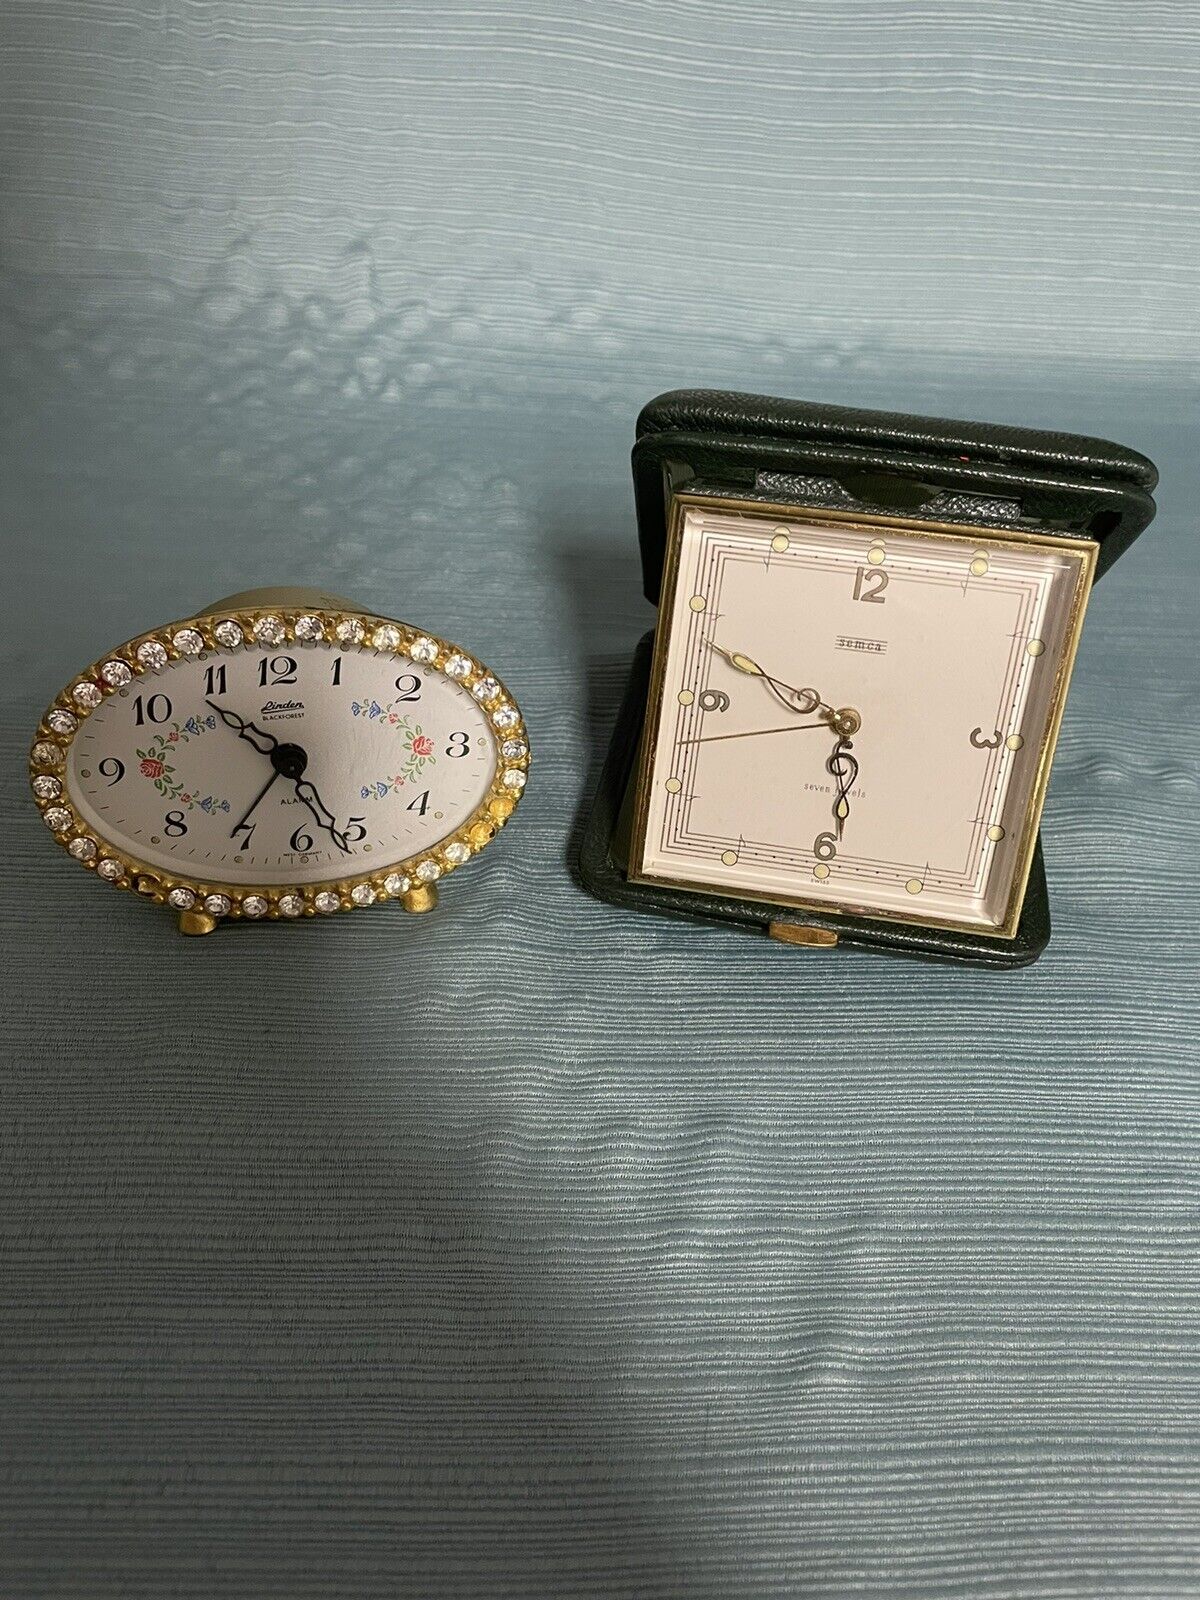 Lot of 2 Vintage Travel Alarm Clocks- Semca 7 Jewels Swiss - Linden Black Forest